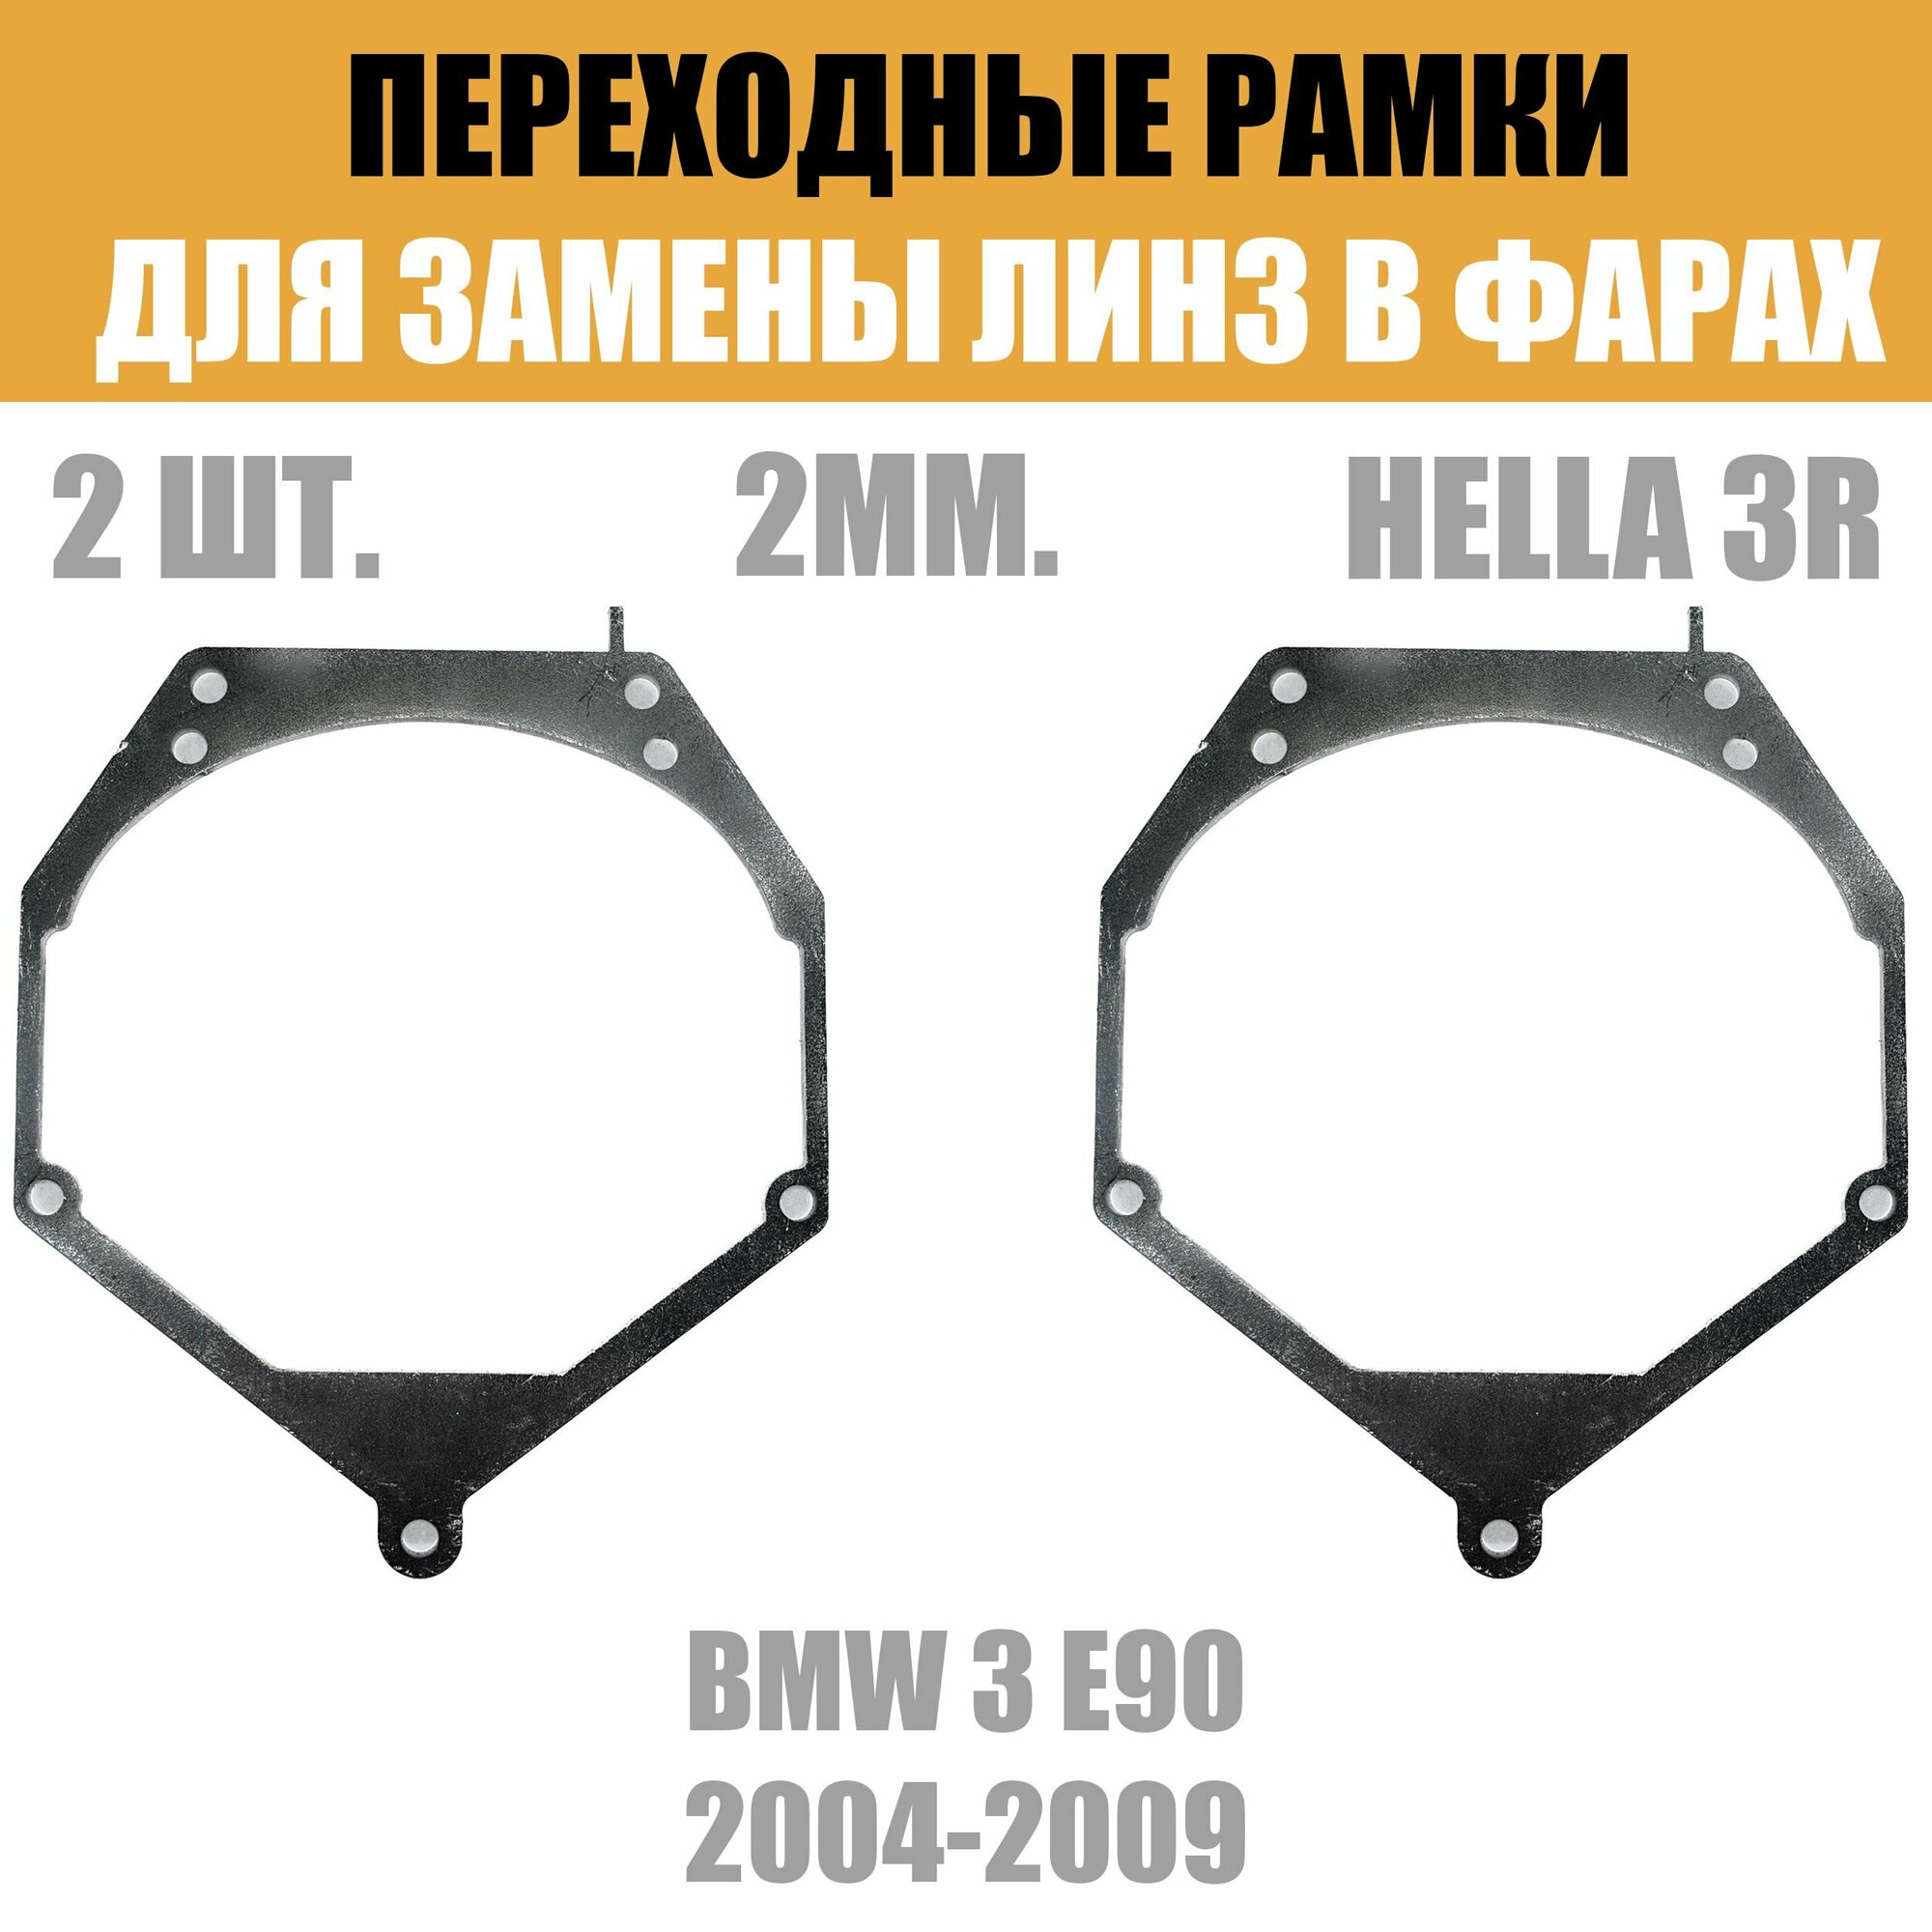 Переходные рамки для линз №55 на BMW 3 E90 2004-2009 под модуль Hella 3R/Hella 3 (Комплект 2шт)